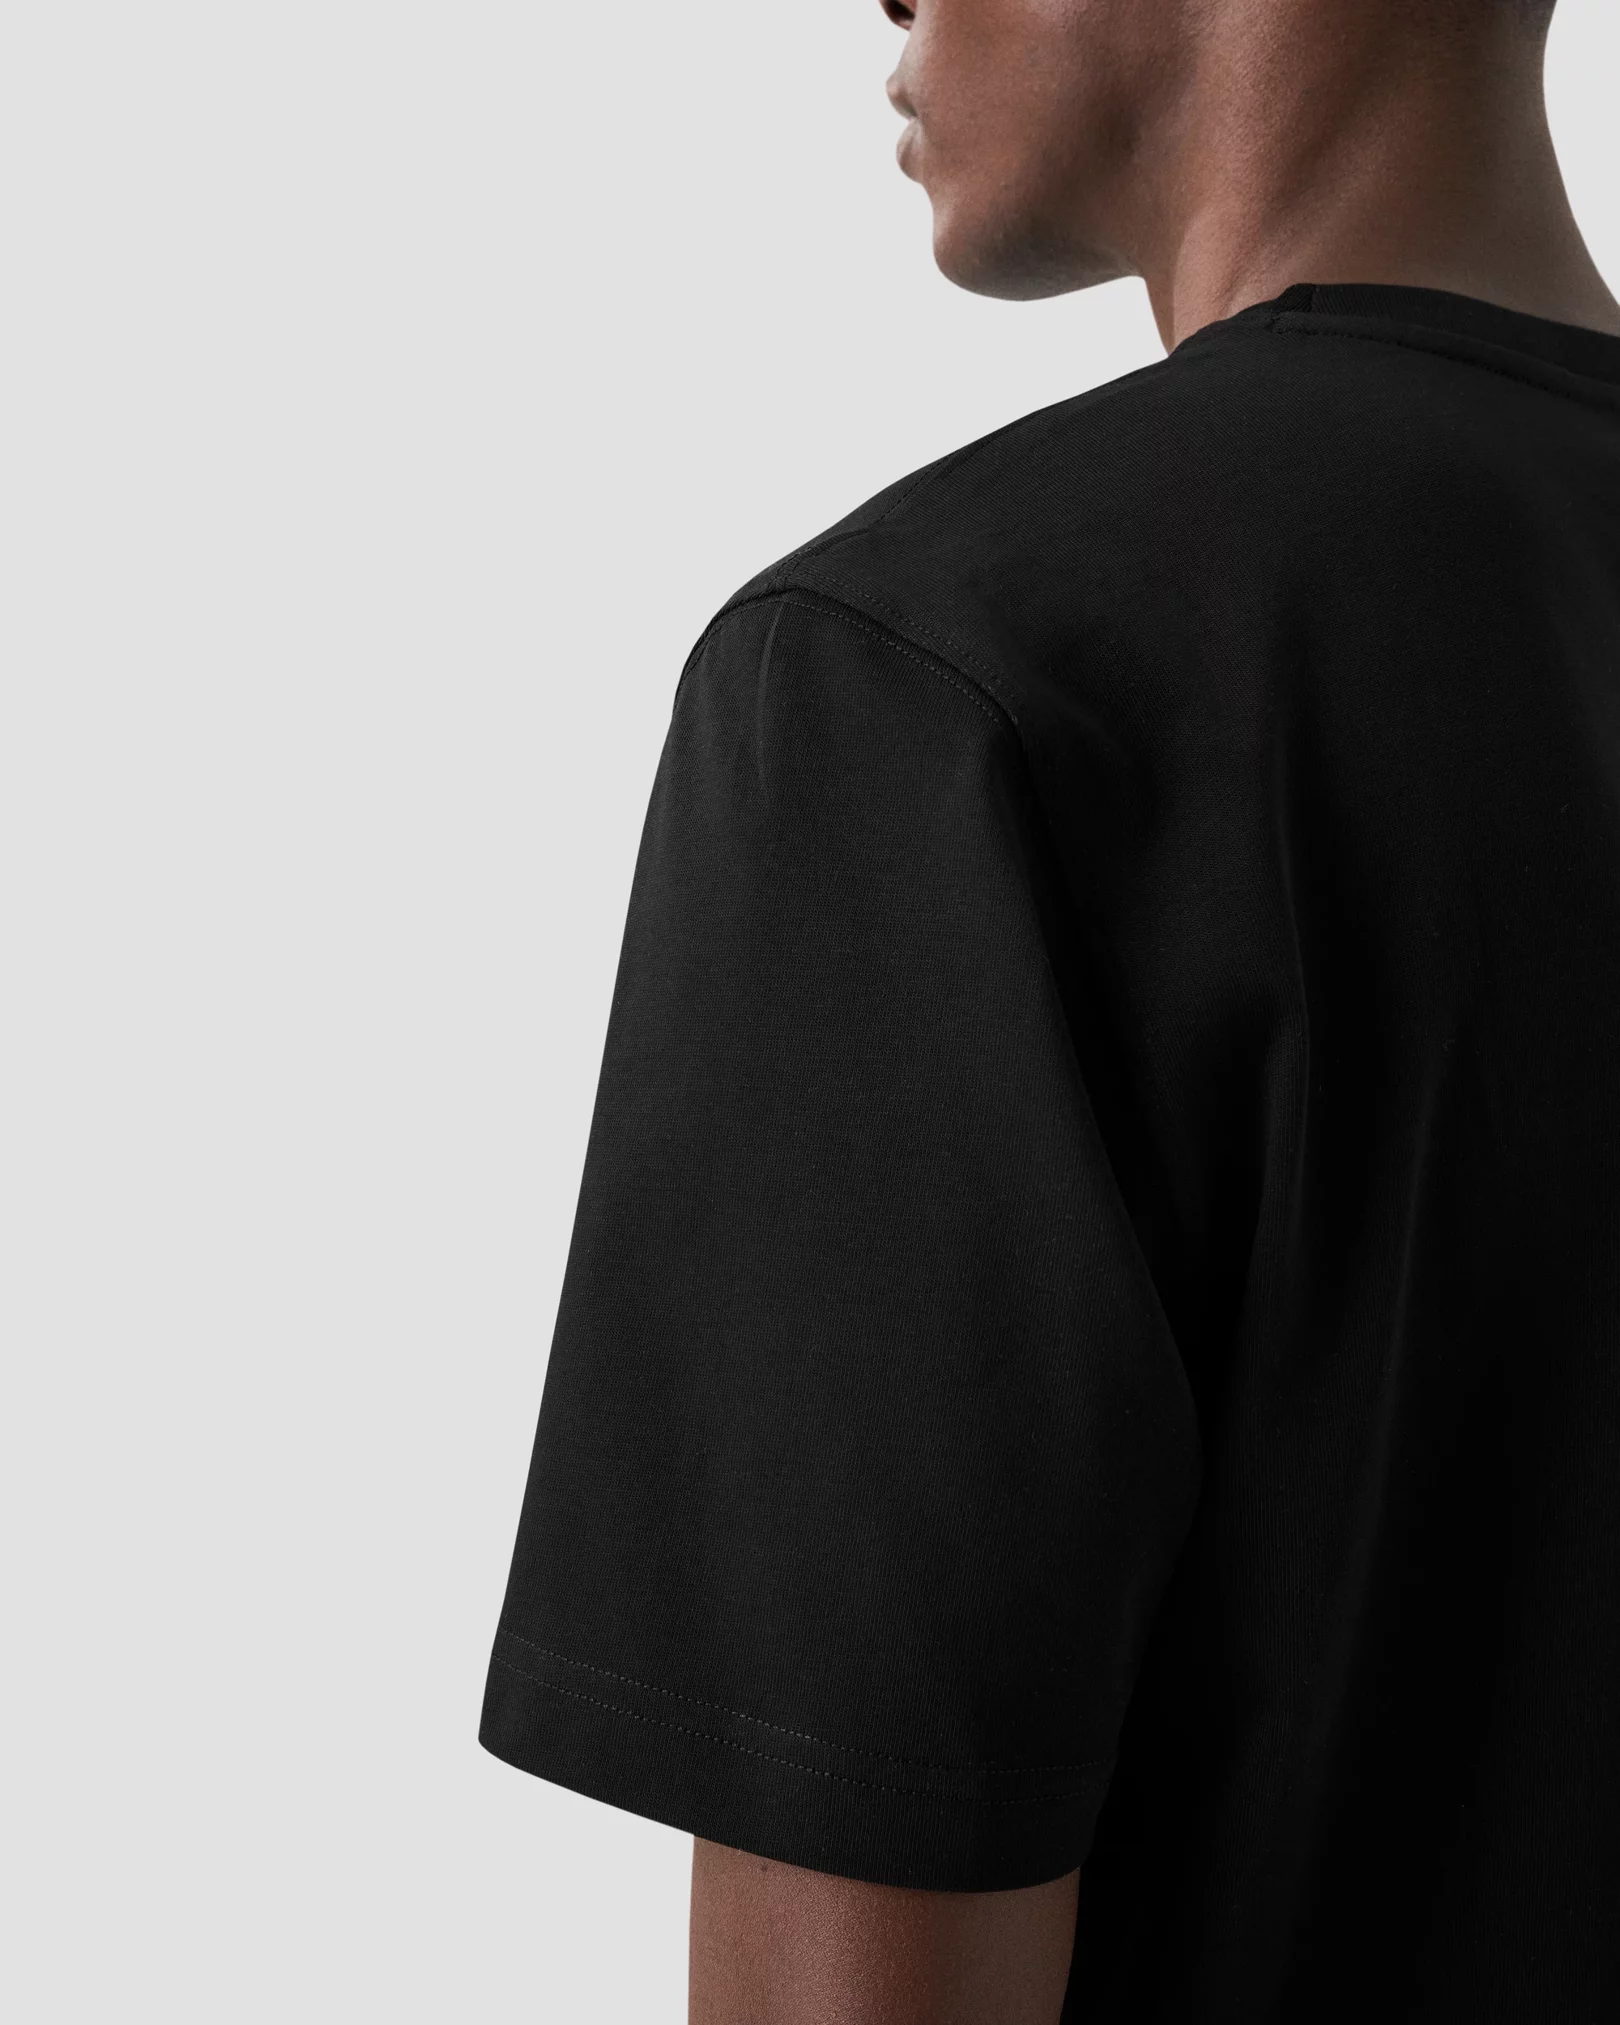 Eton - black cotton t shirt